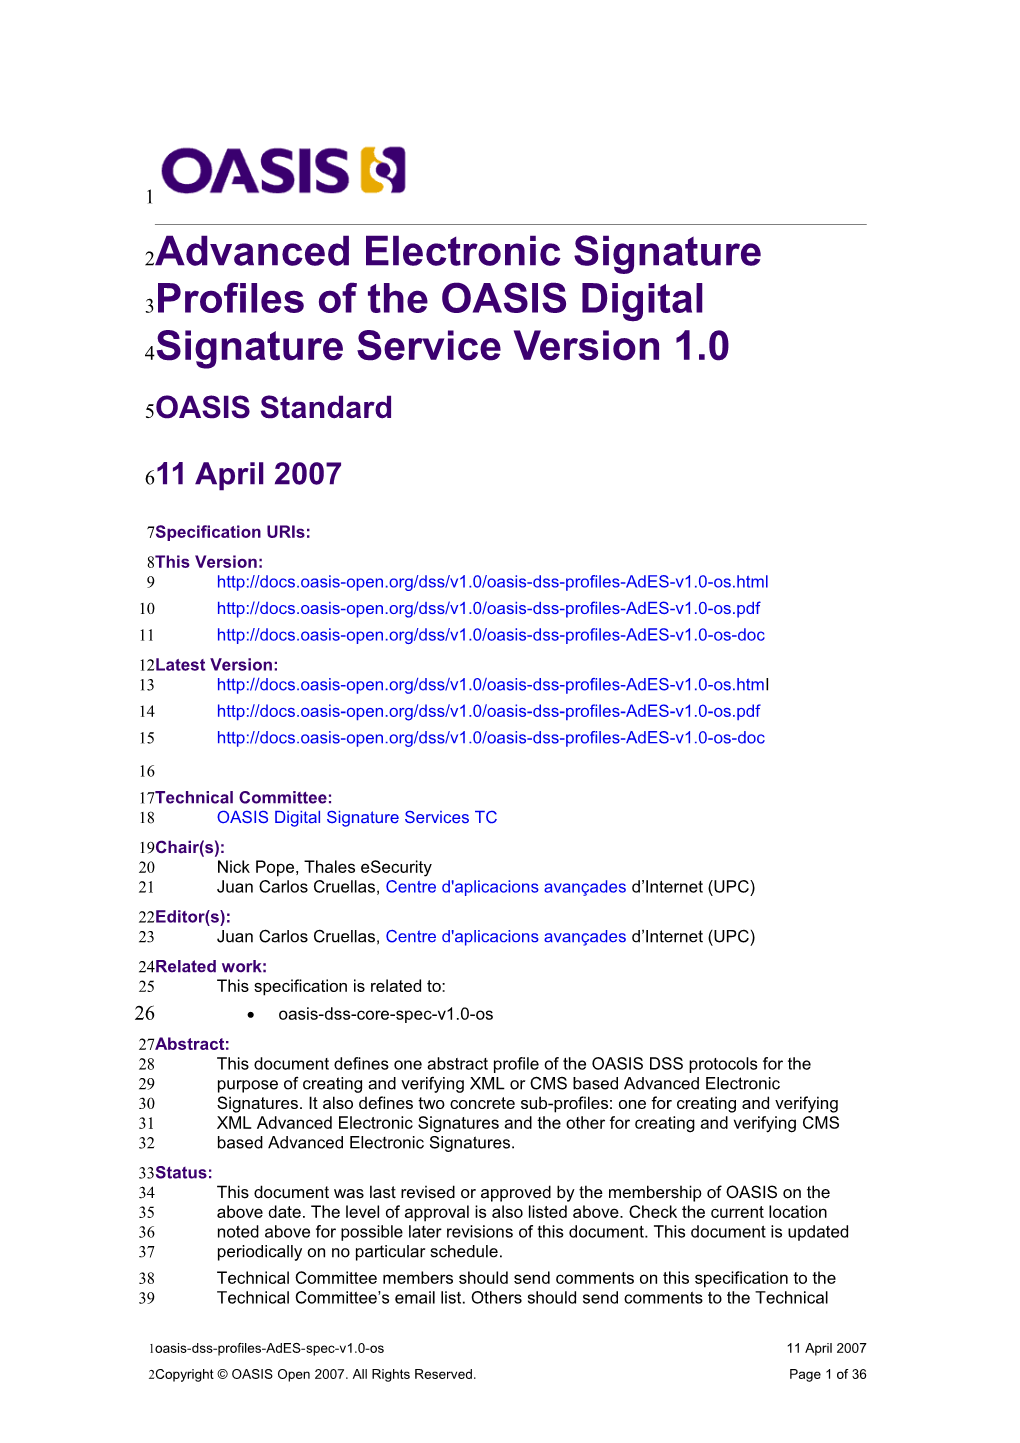 Advanced Electronic Signature Profiles of the OASIS Digital Signature Service Version 1.0